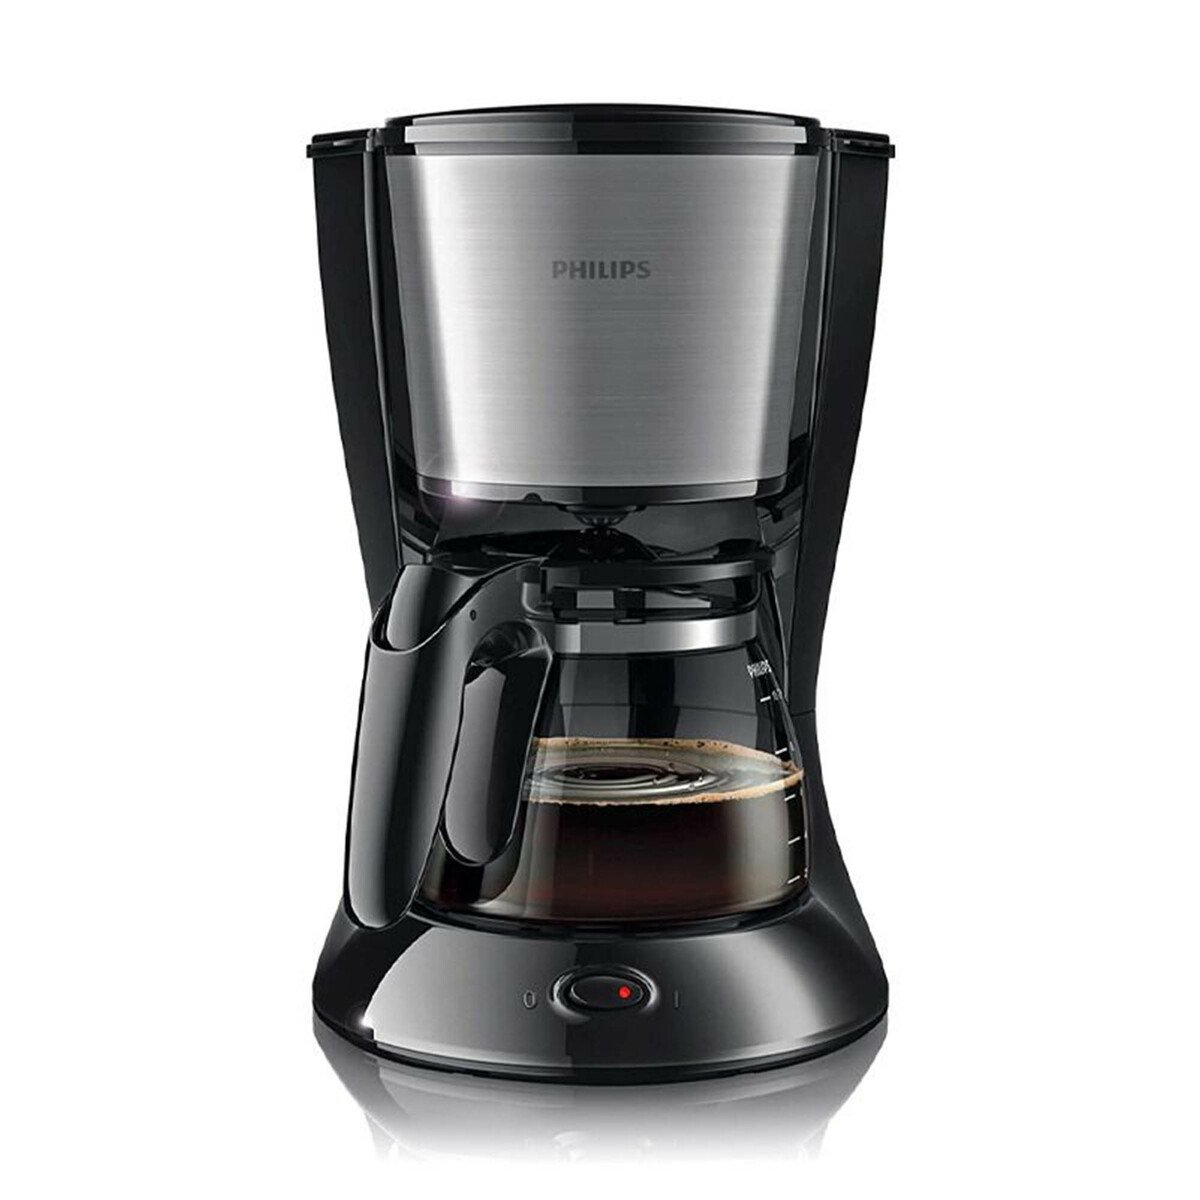 Philips Coffee Maker HD7462/20